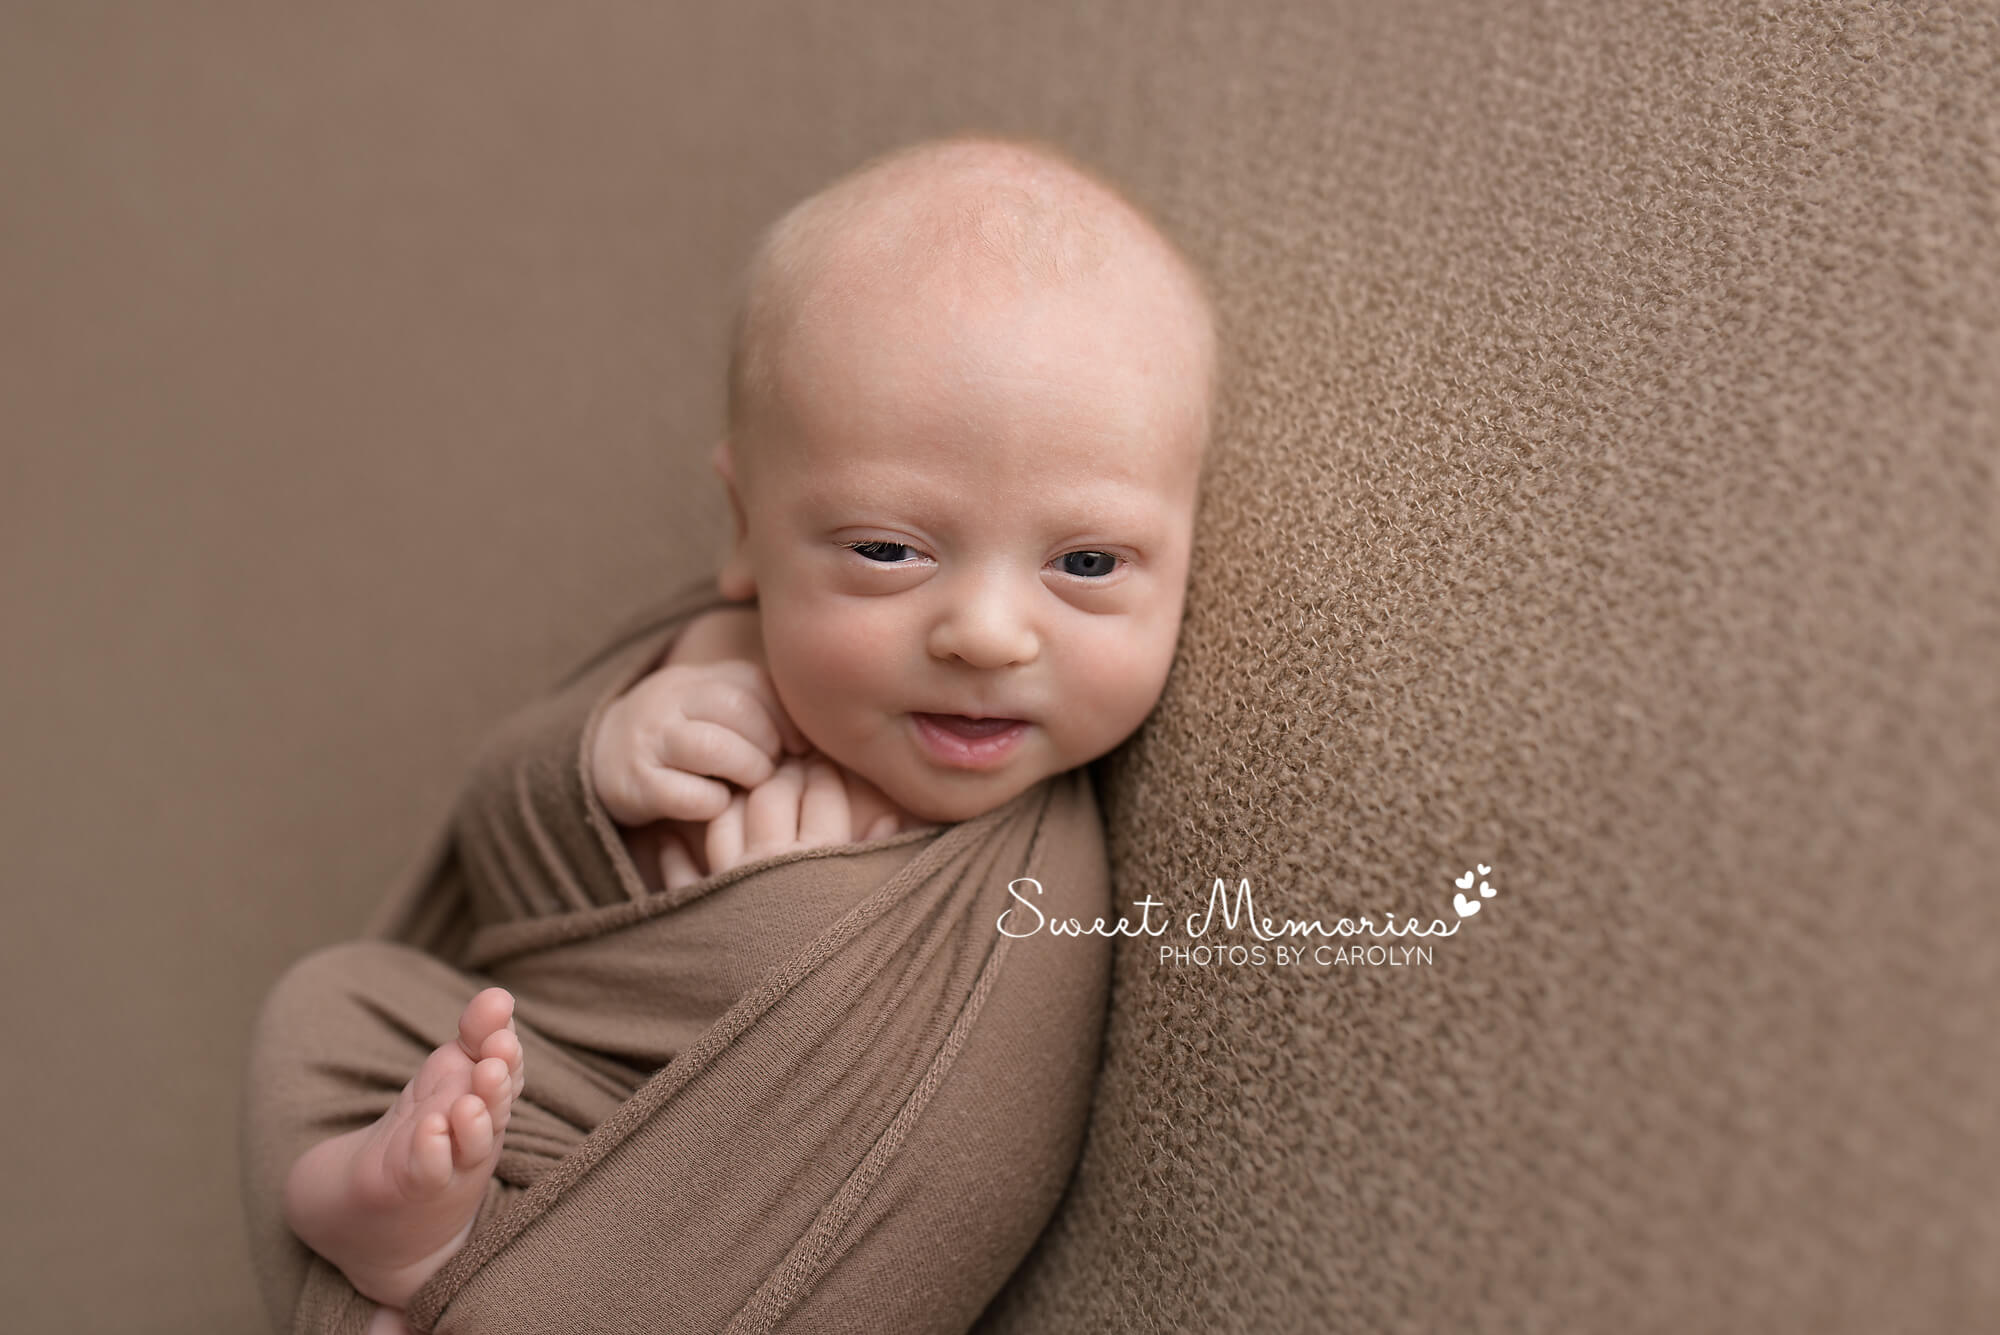 newborn baby boy swaddled in brown awake smile | Warrington, PA newborn photographer | Sweet Memories Photos by Carolyn, Quakertown Pennsylvania